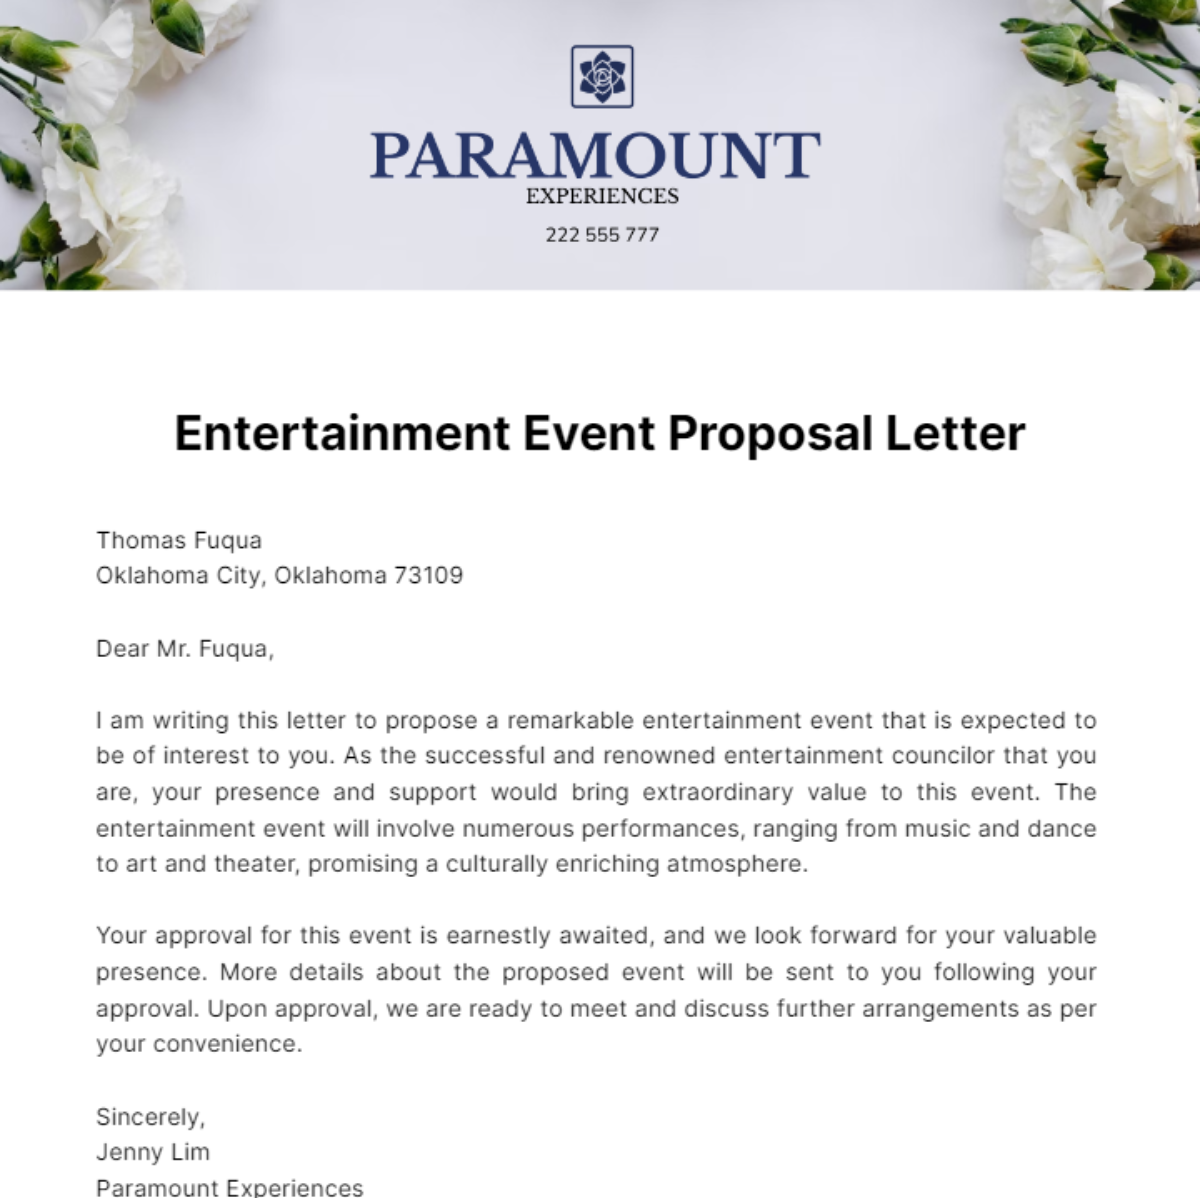 Entertainment Event Proposal Letter Template